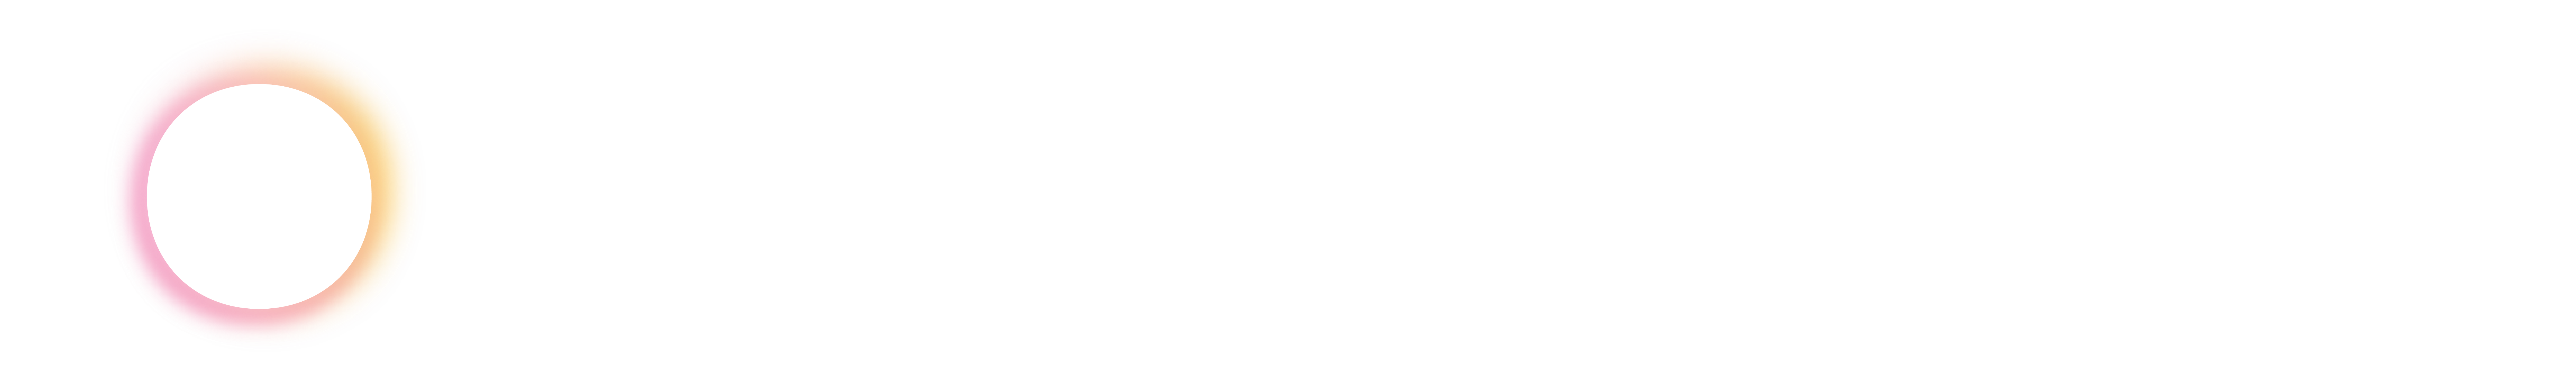 thinktum and illustrate inc. logos